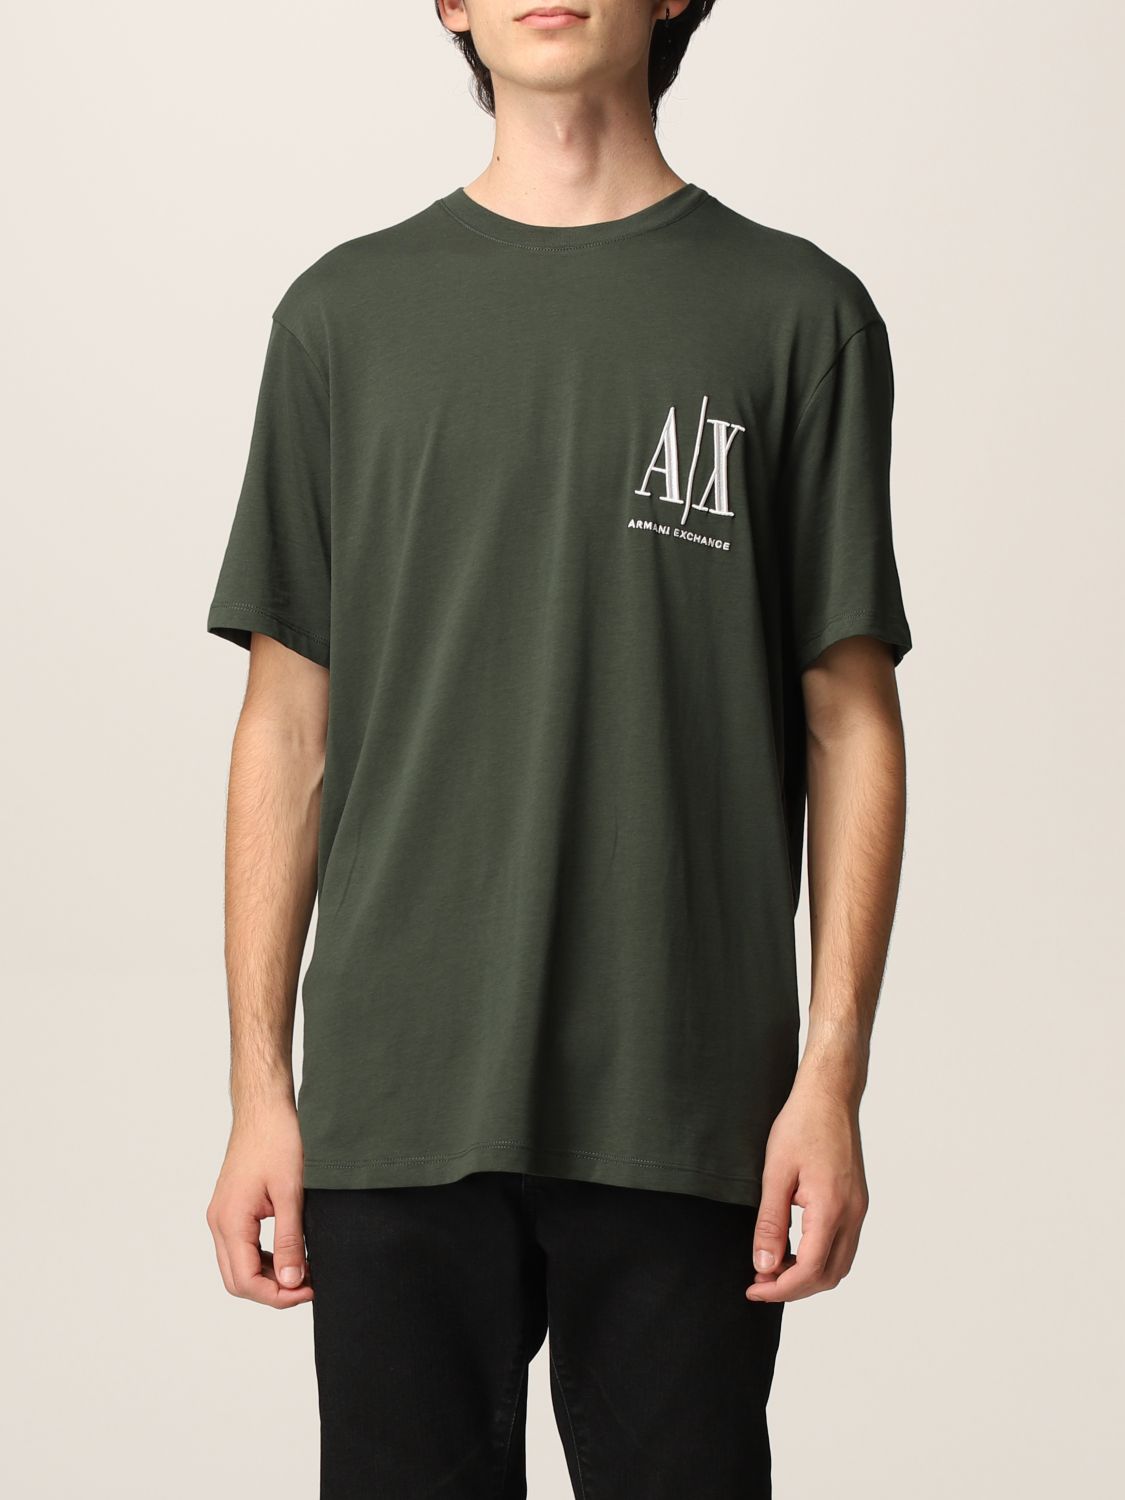 Armani Exchange Green T Shirt Cheap Sellers, Save 66% 